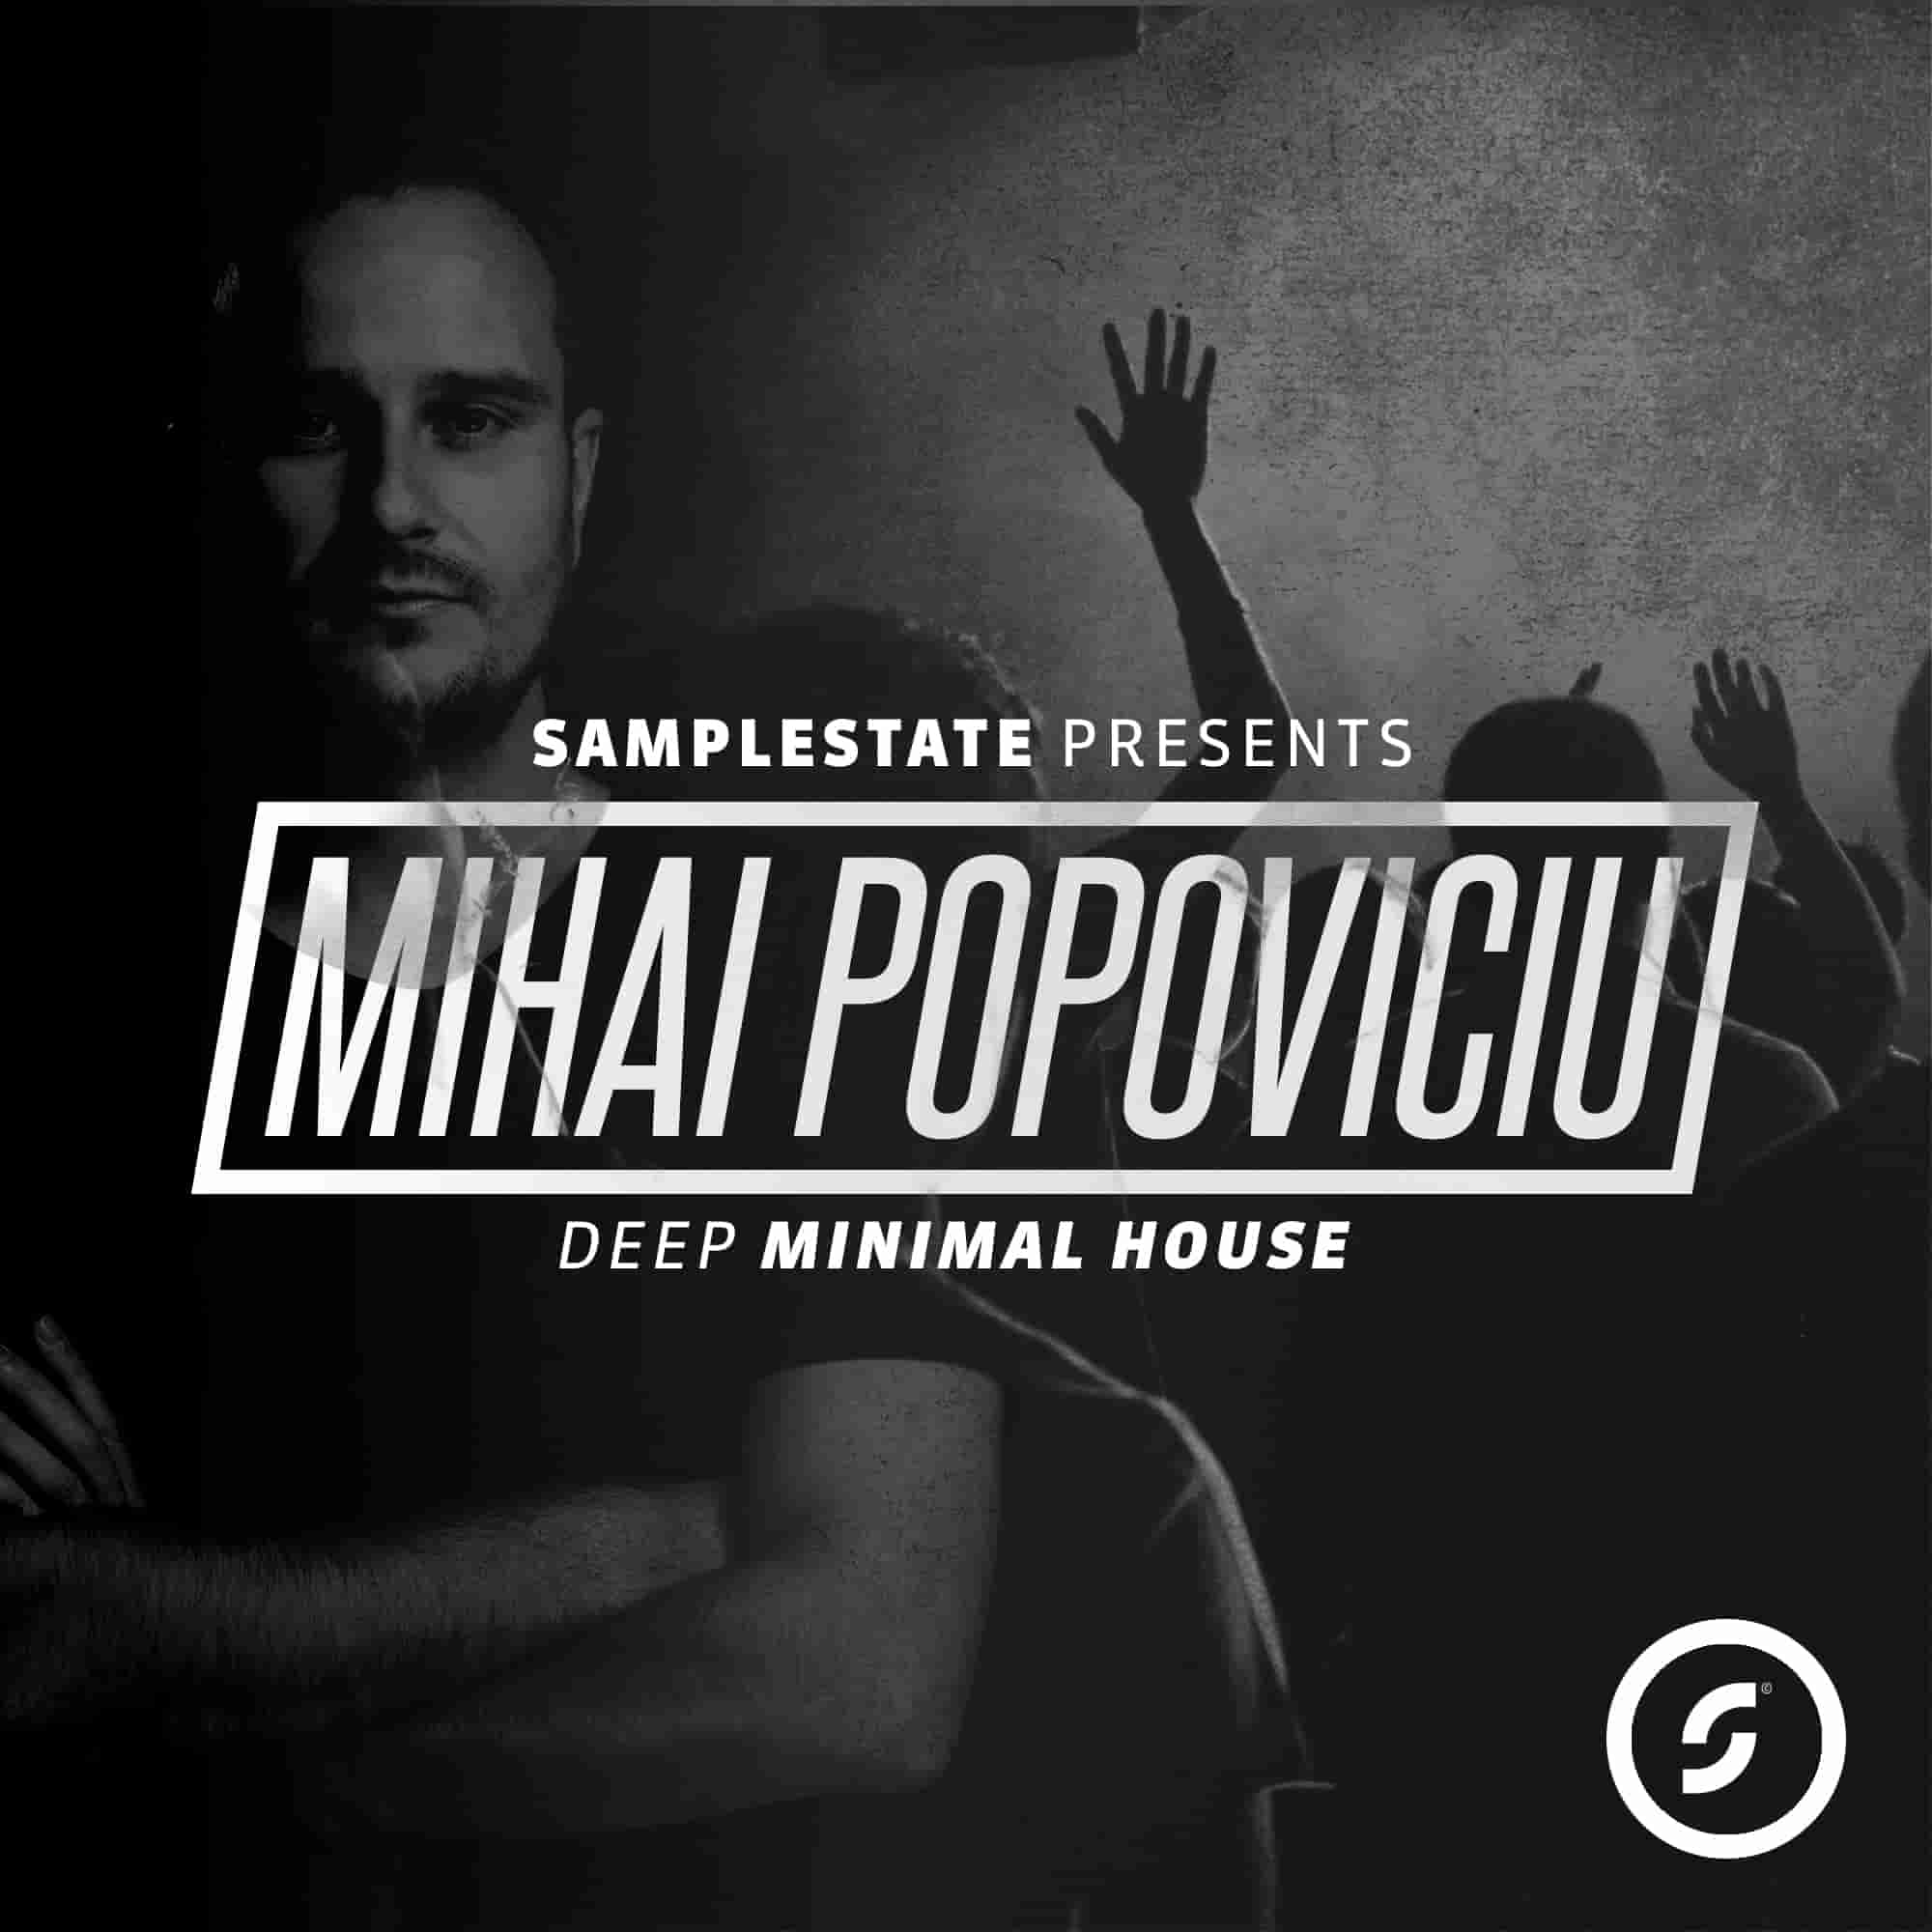 Mihai Popoviciu – Deep Minimal House by Samplestate